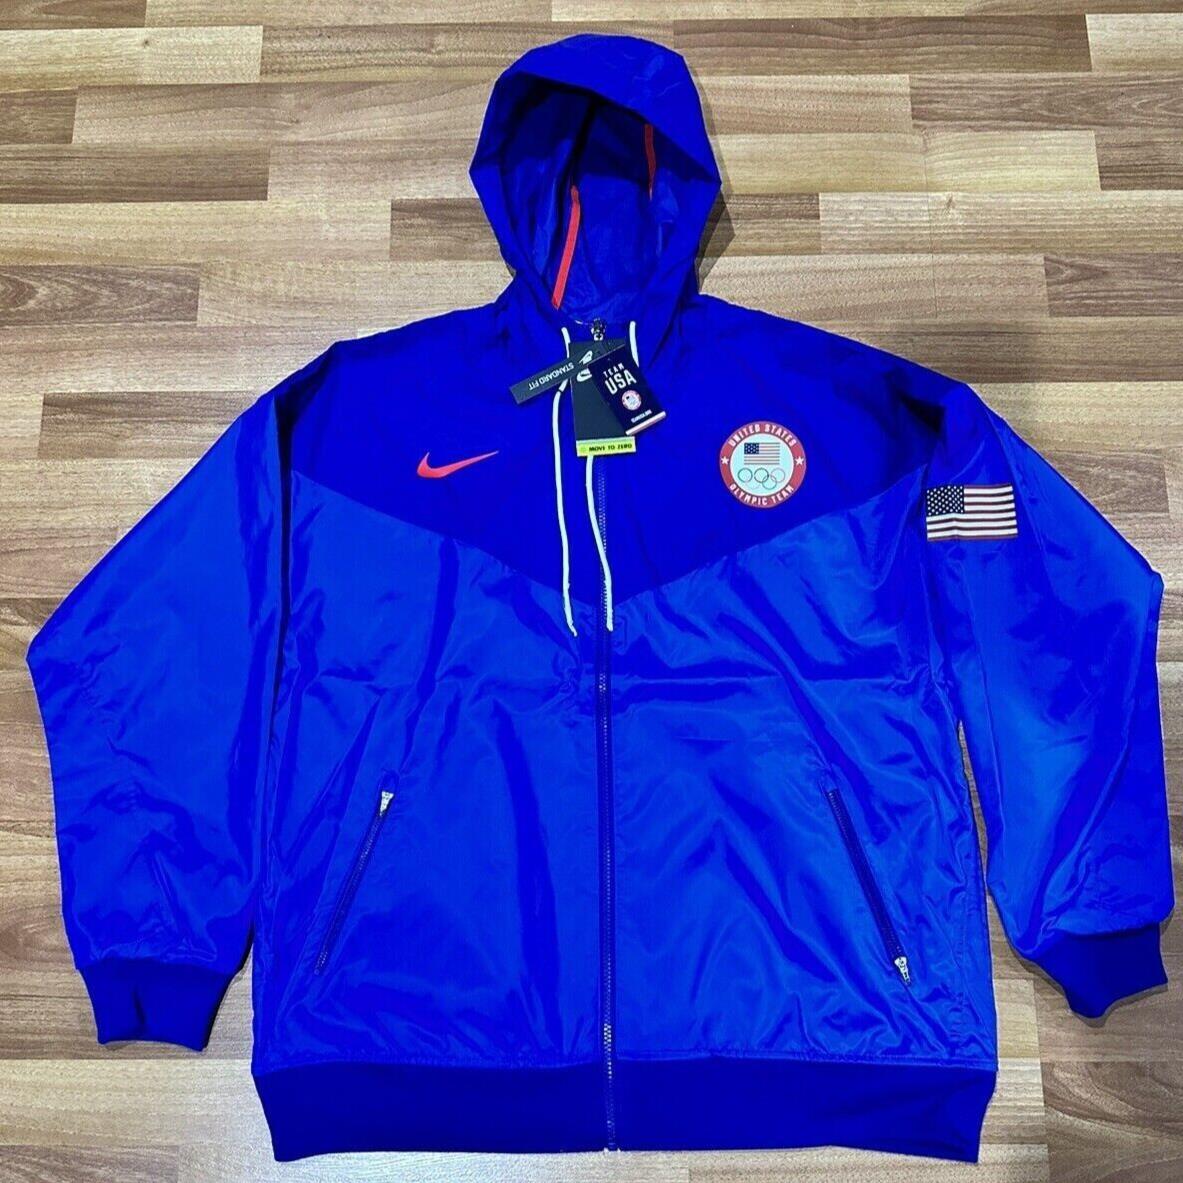 Nike Team Usa Olympic Windrunner Jacket Blue CK5813-455 Mens Sz L